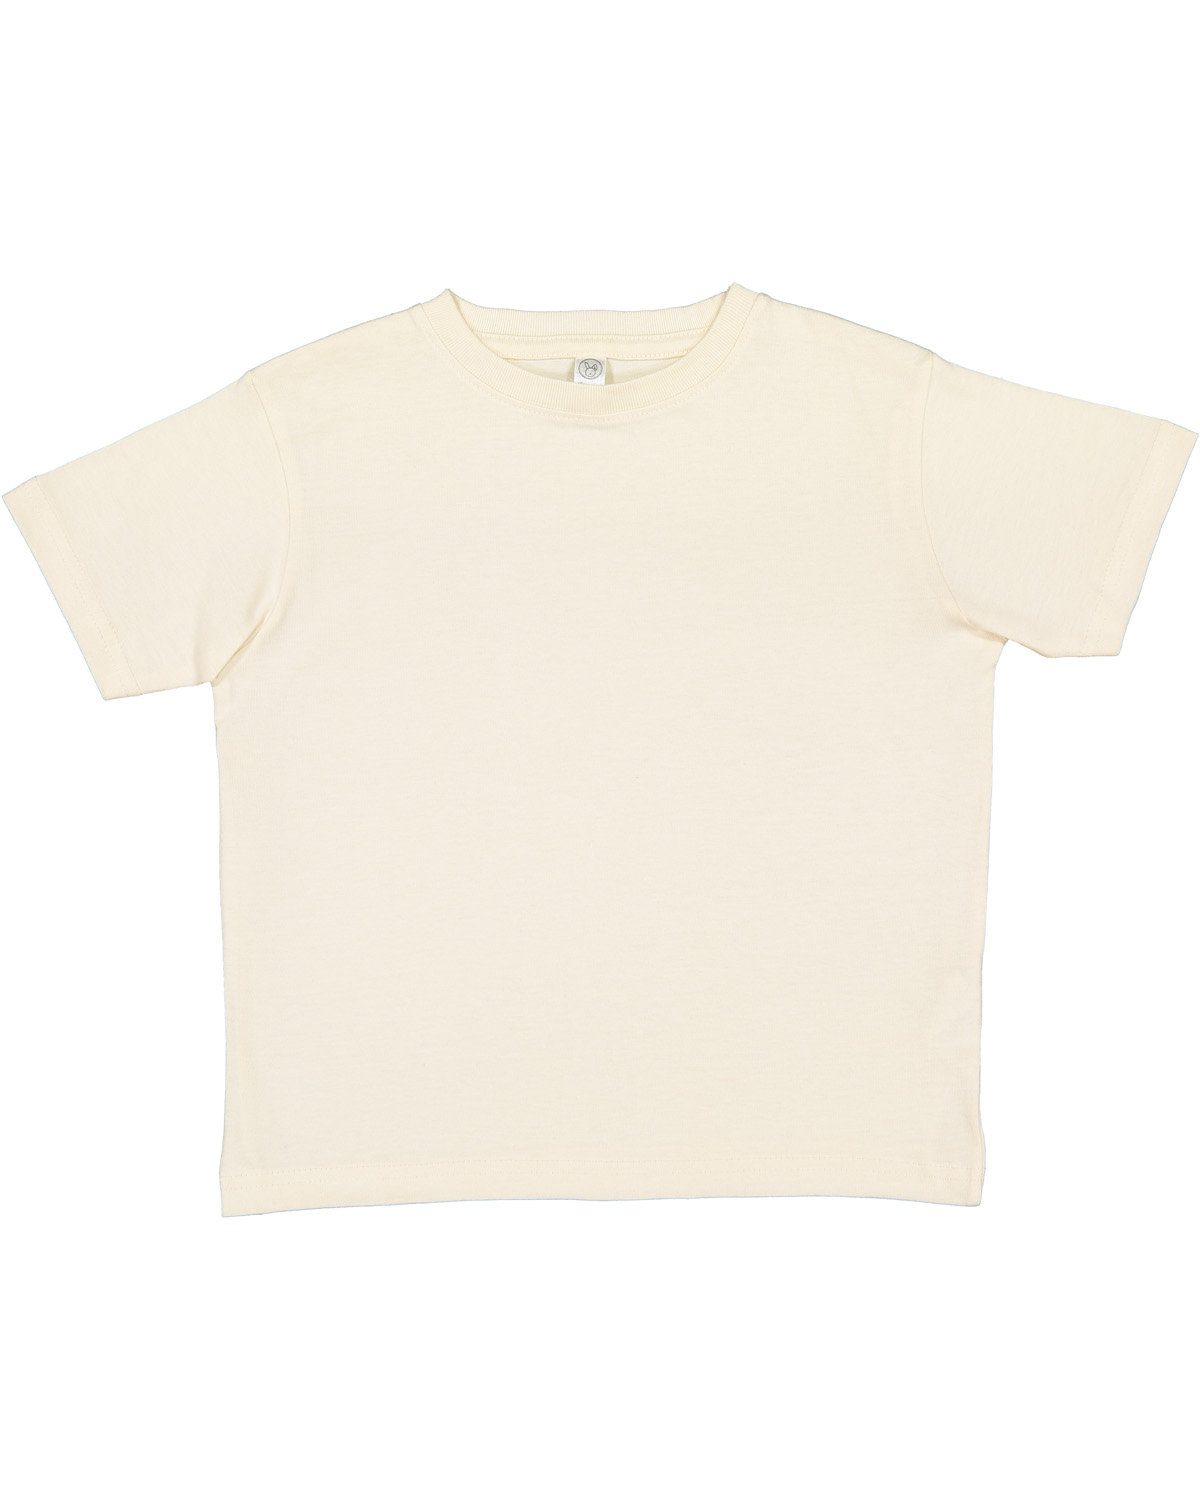 Rabbit Skins Toddler Premium Jersey T-Shirt NATURAL 